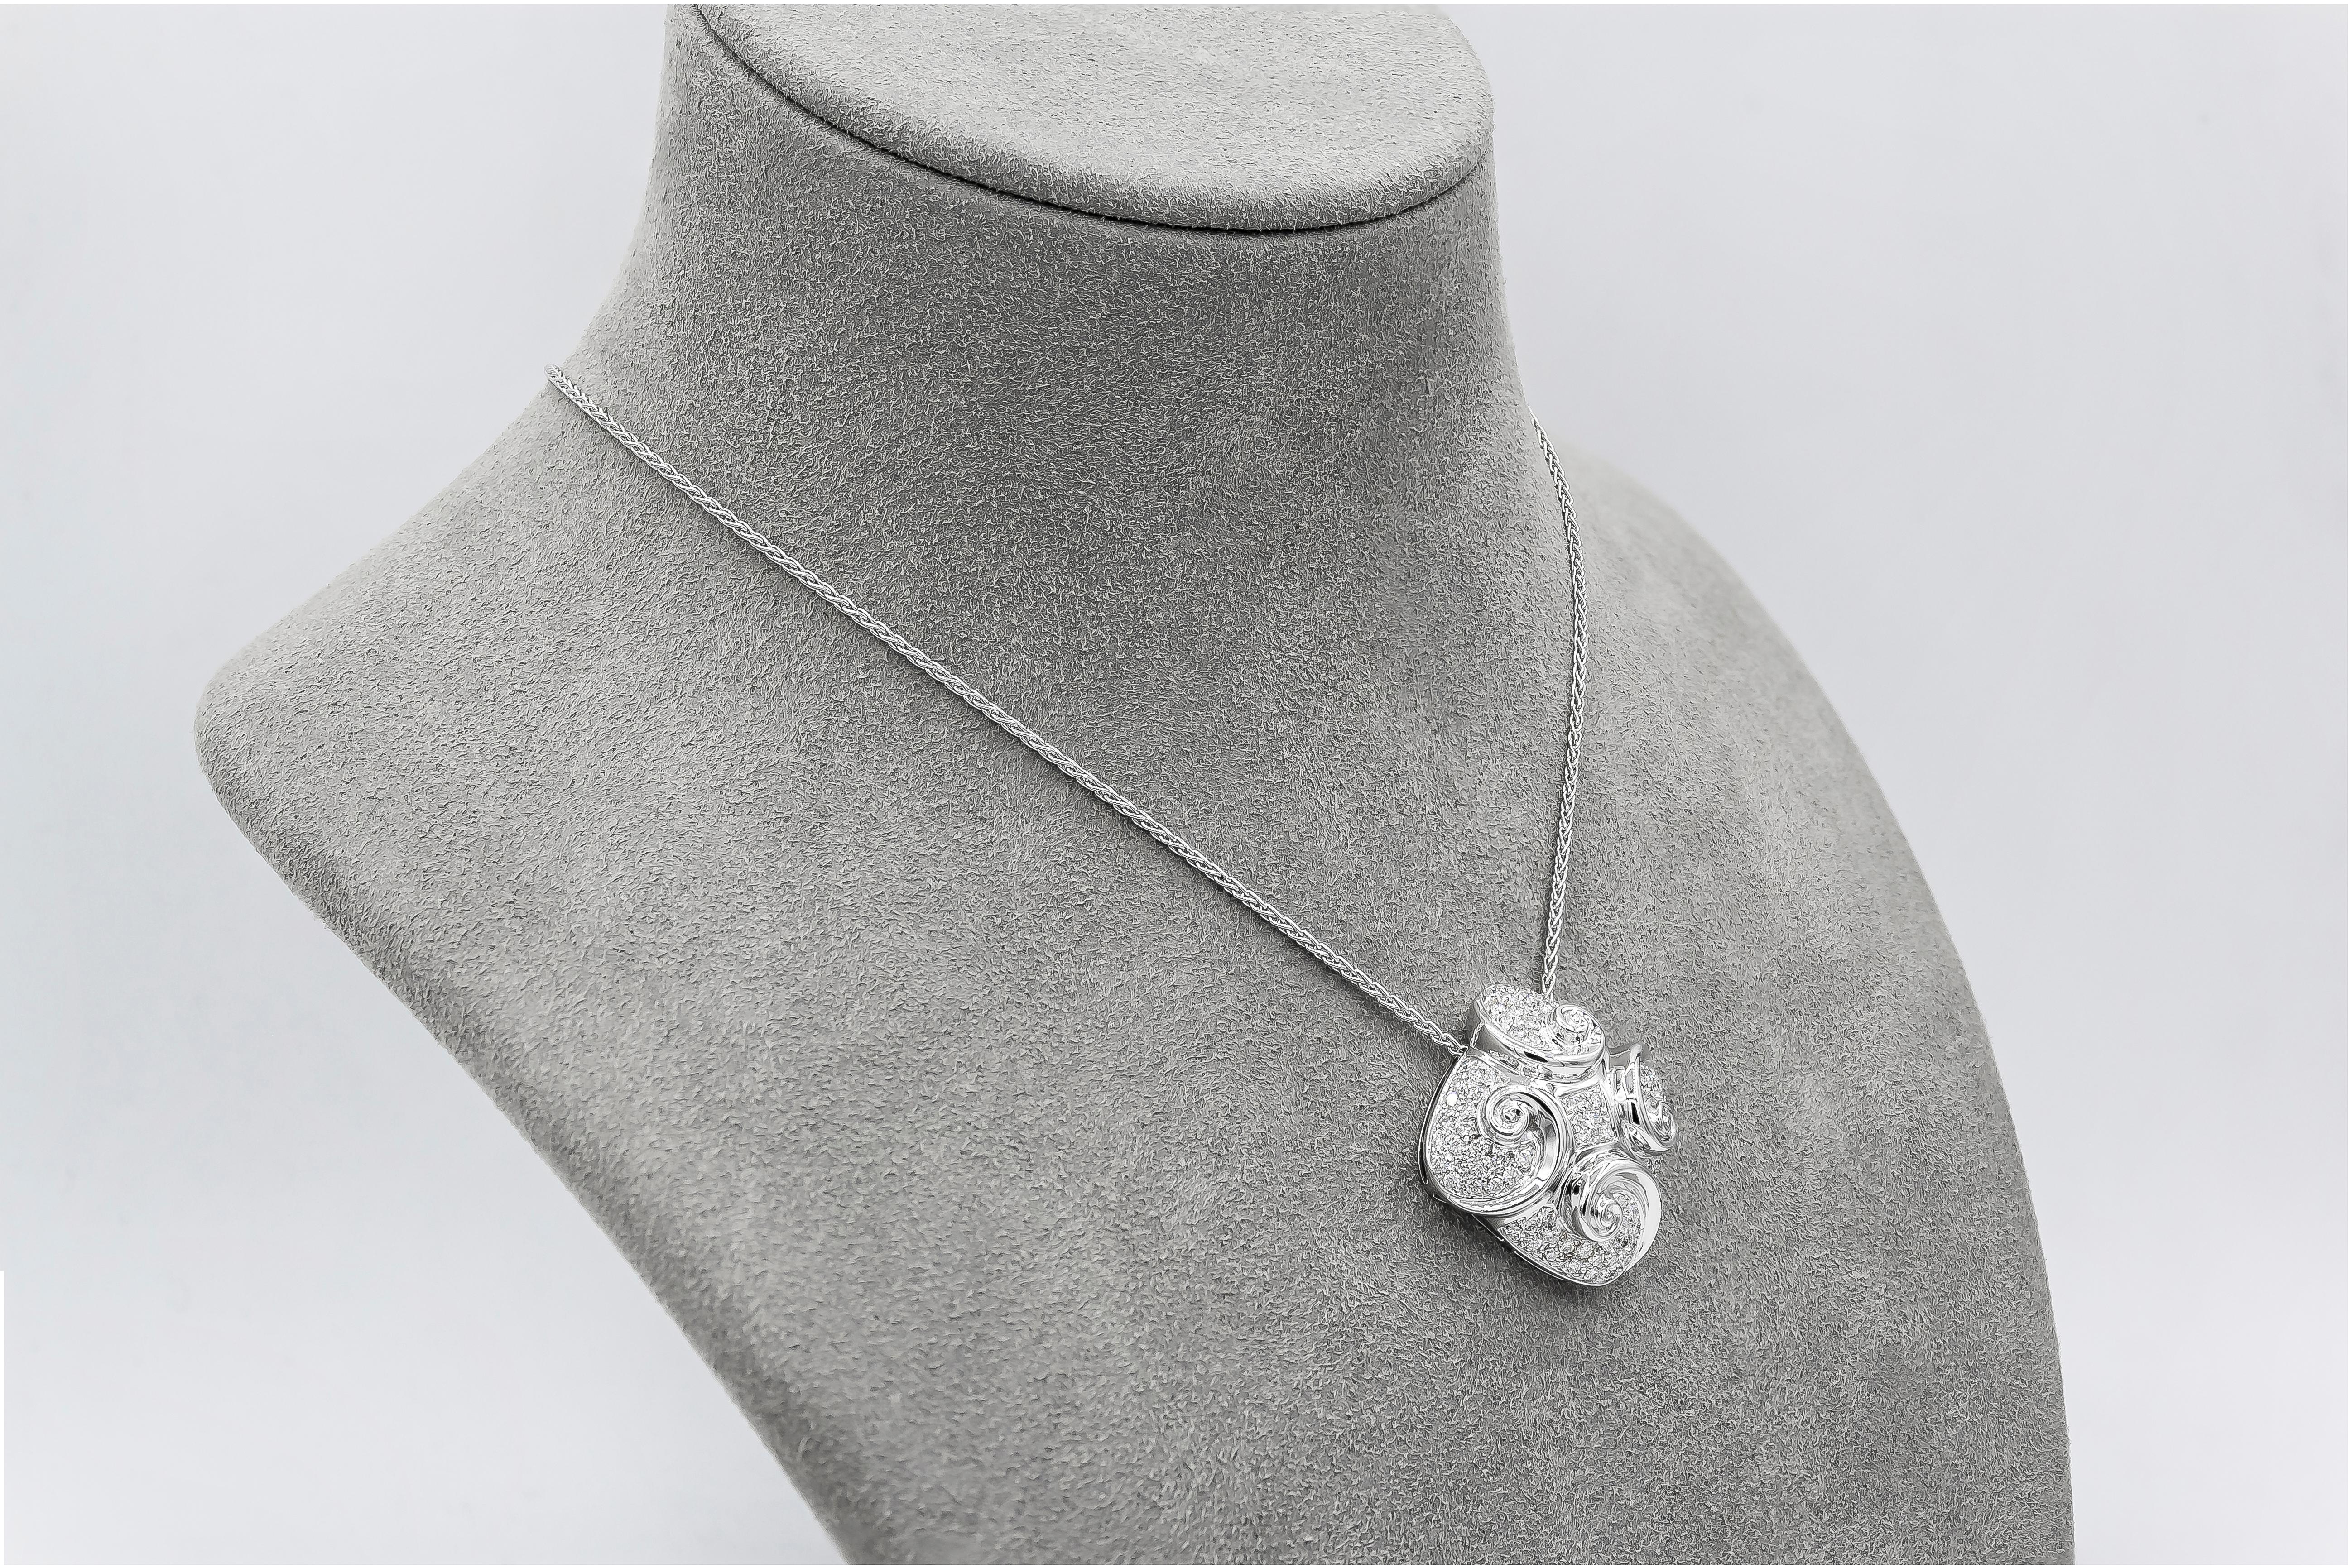 Contemporary Roman Malakov 1.34 Carat Diamond Swirl Fashion Pendant Necklace For Sale